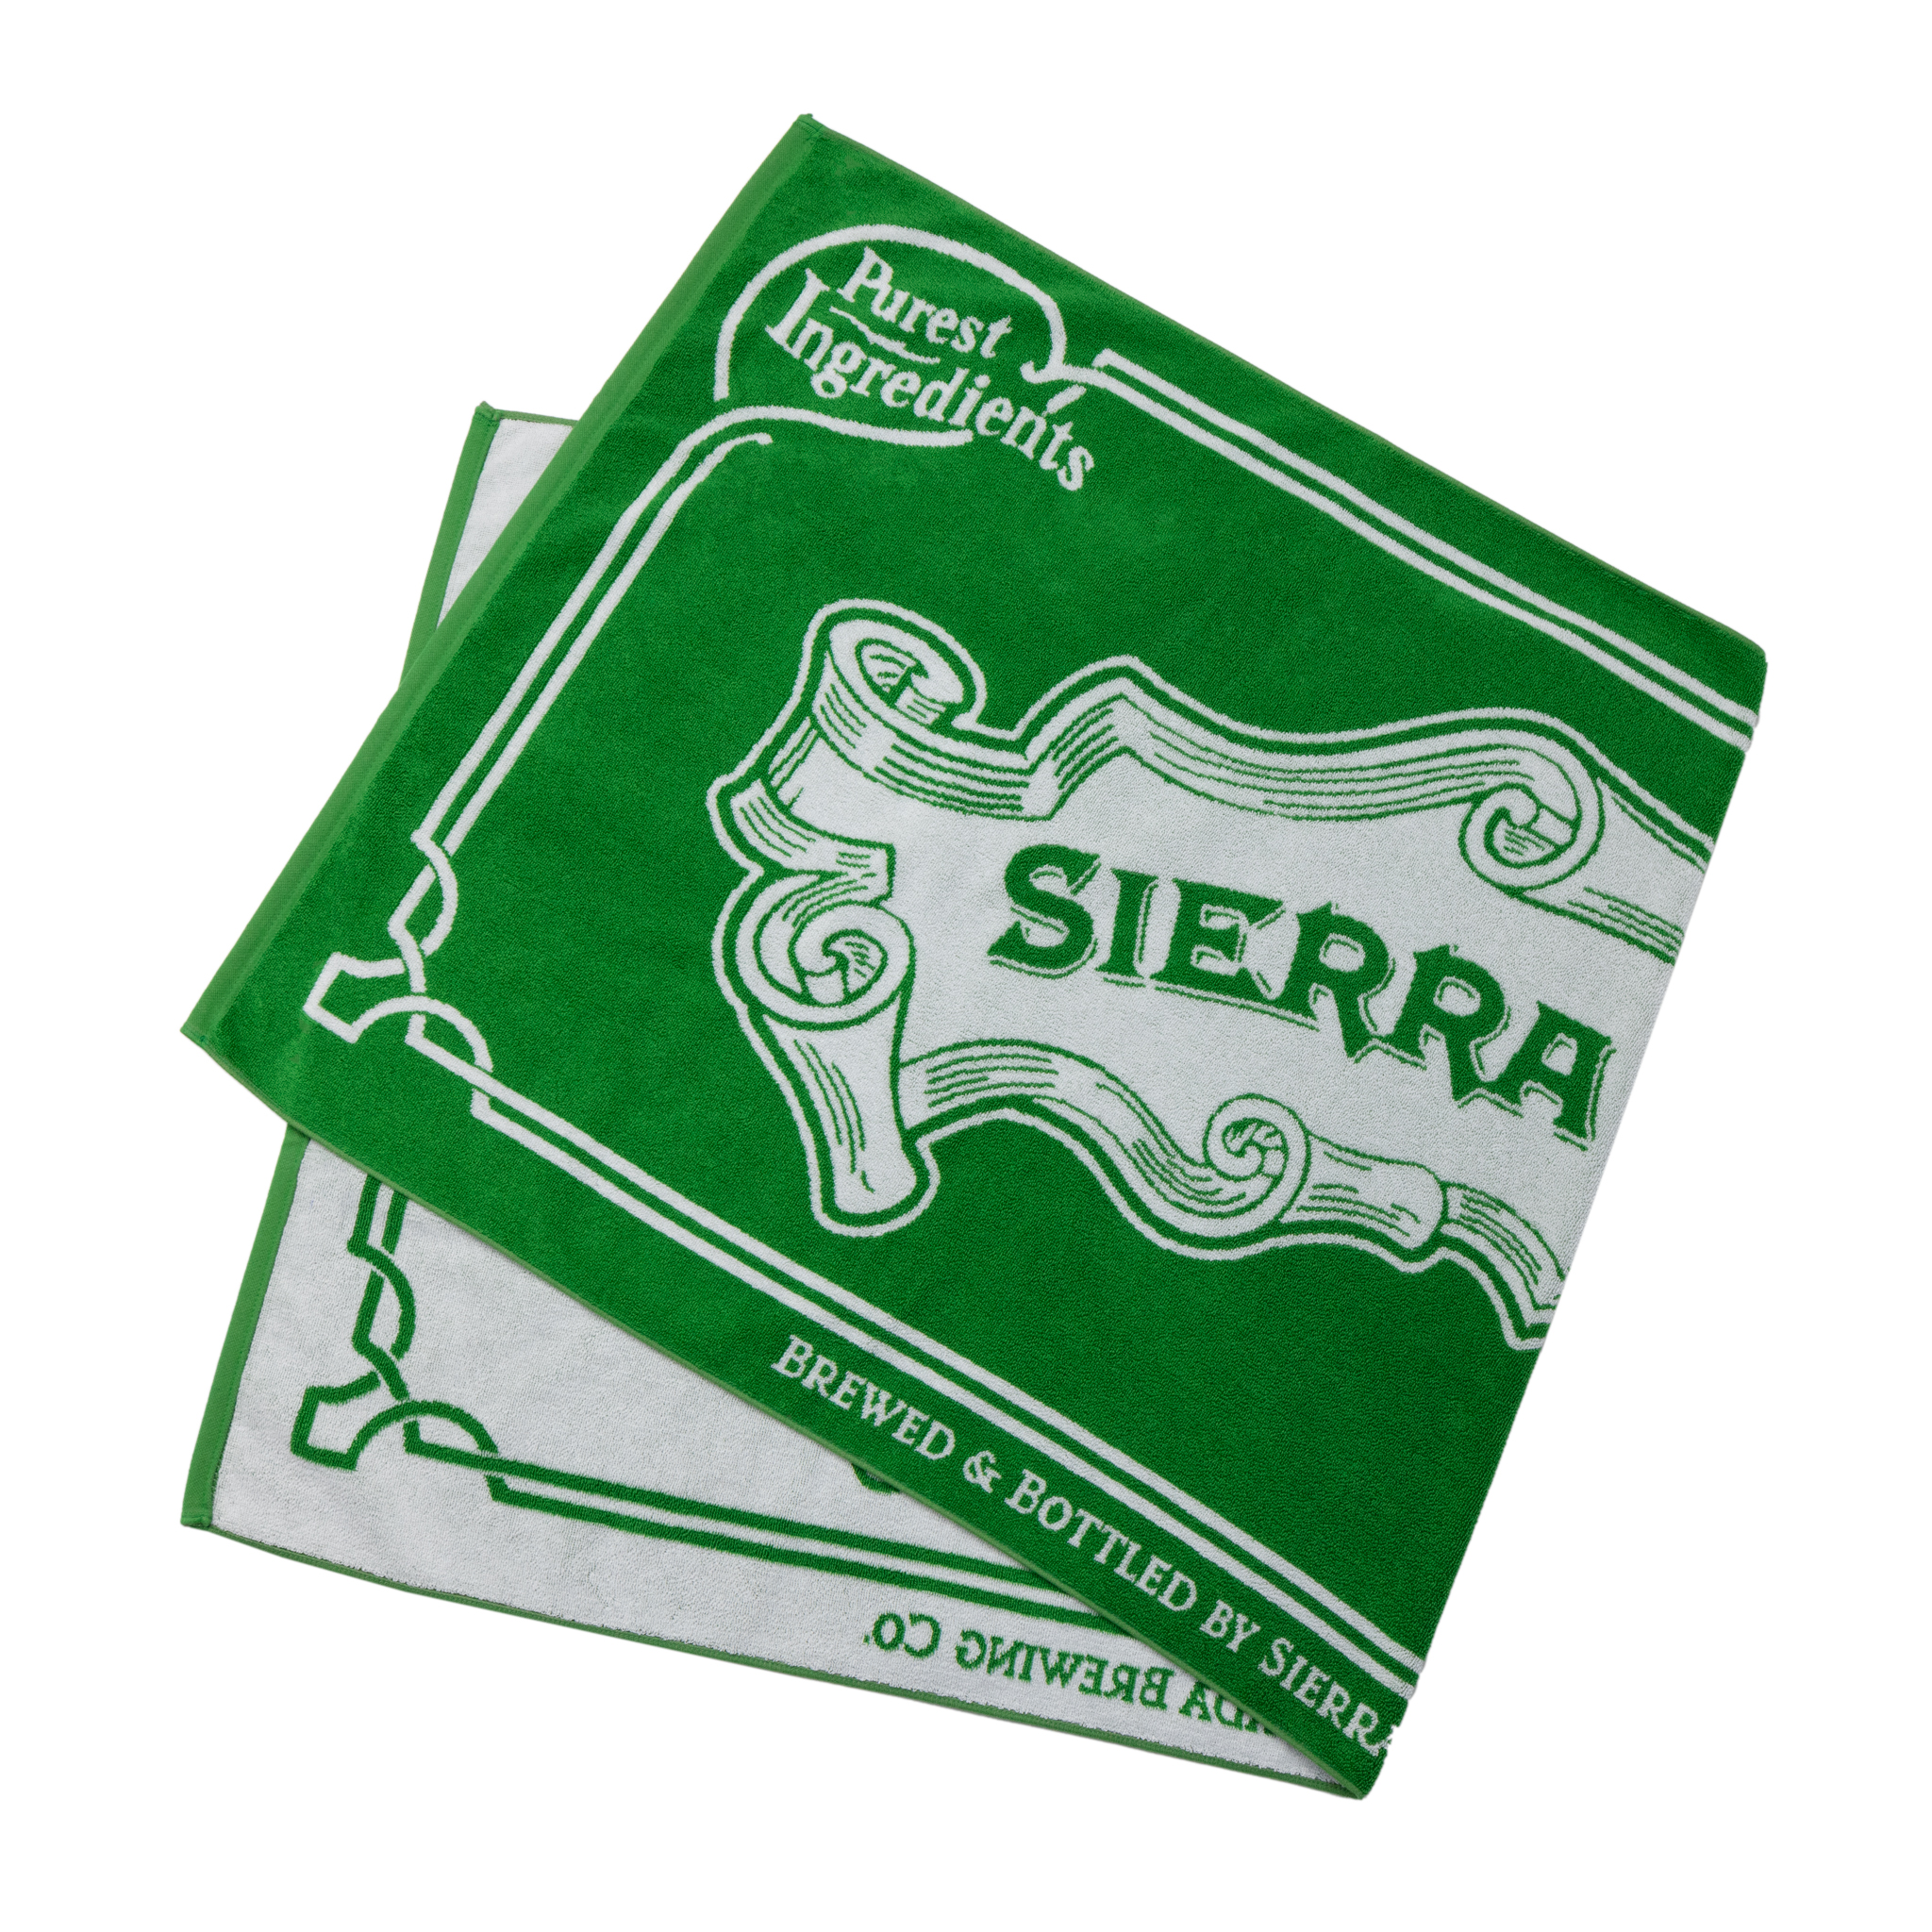 Sierra Nevada Brewing Co. Beach Towel folded view